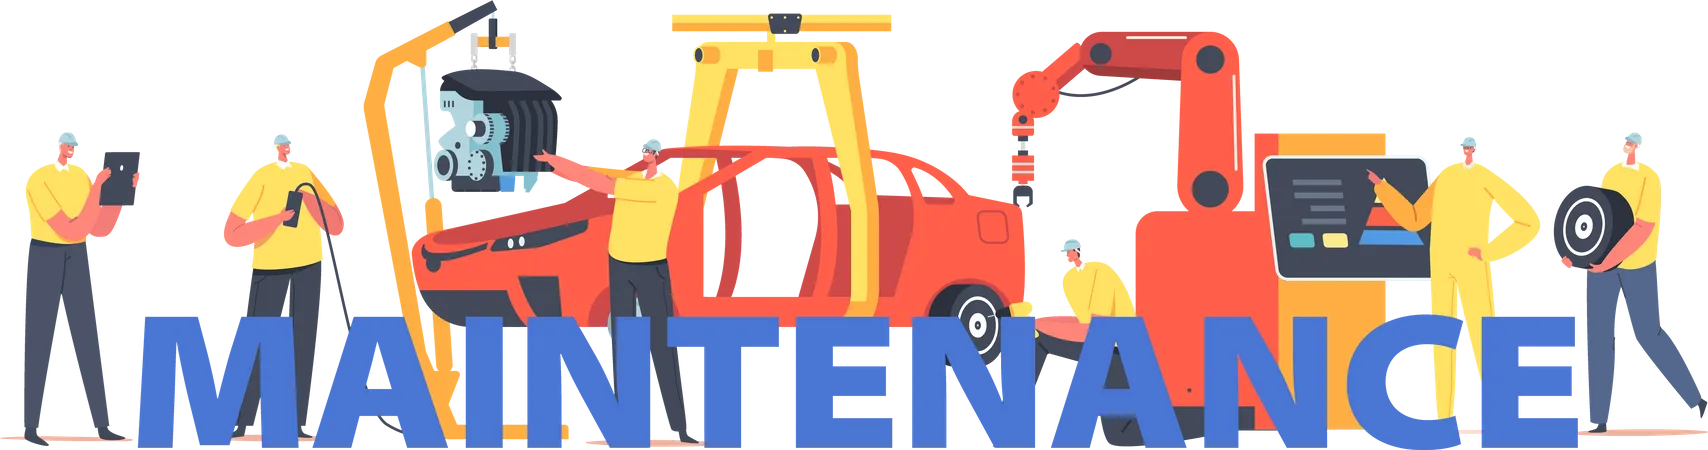 People working in auto maintenance  Illustration